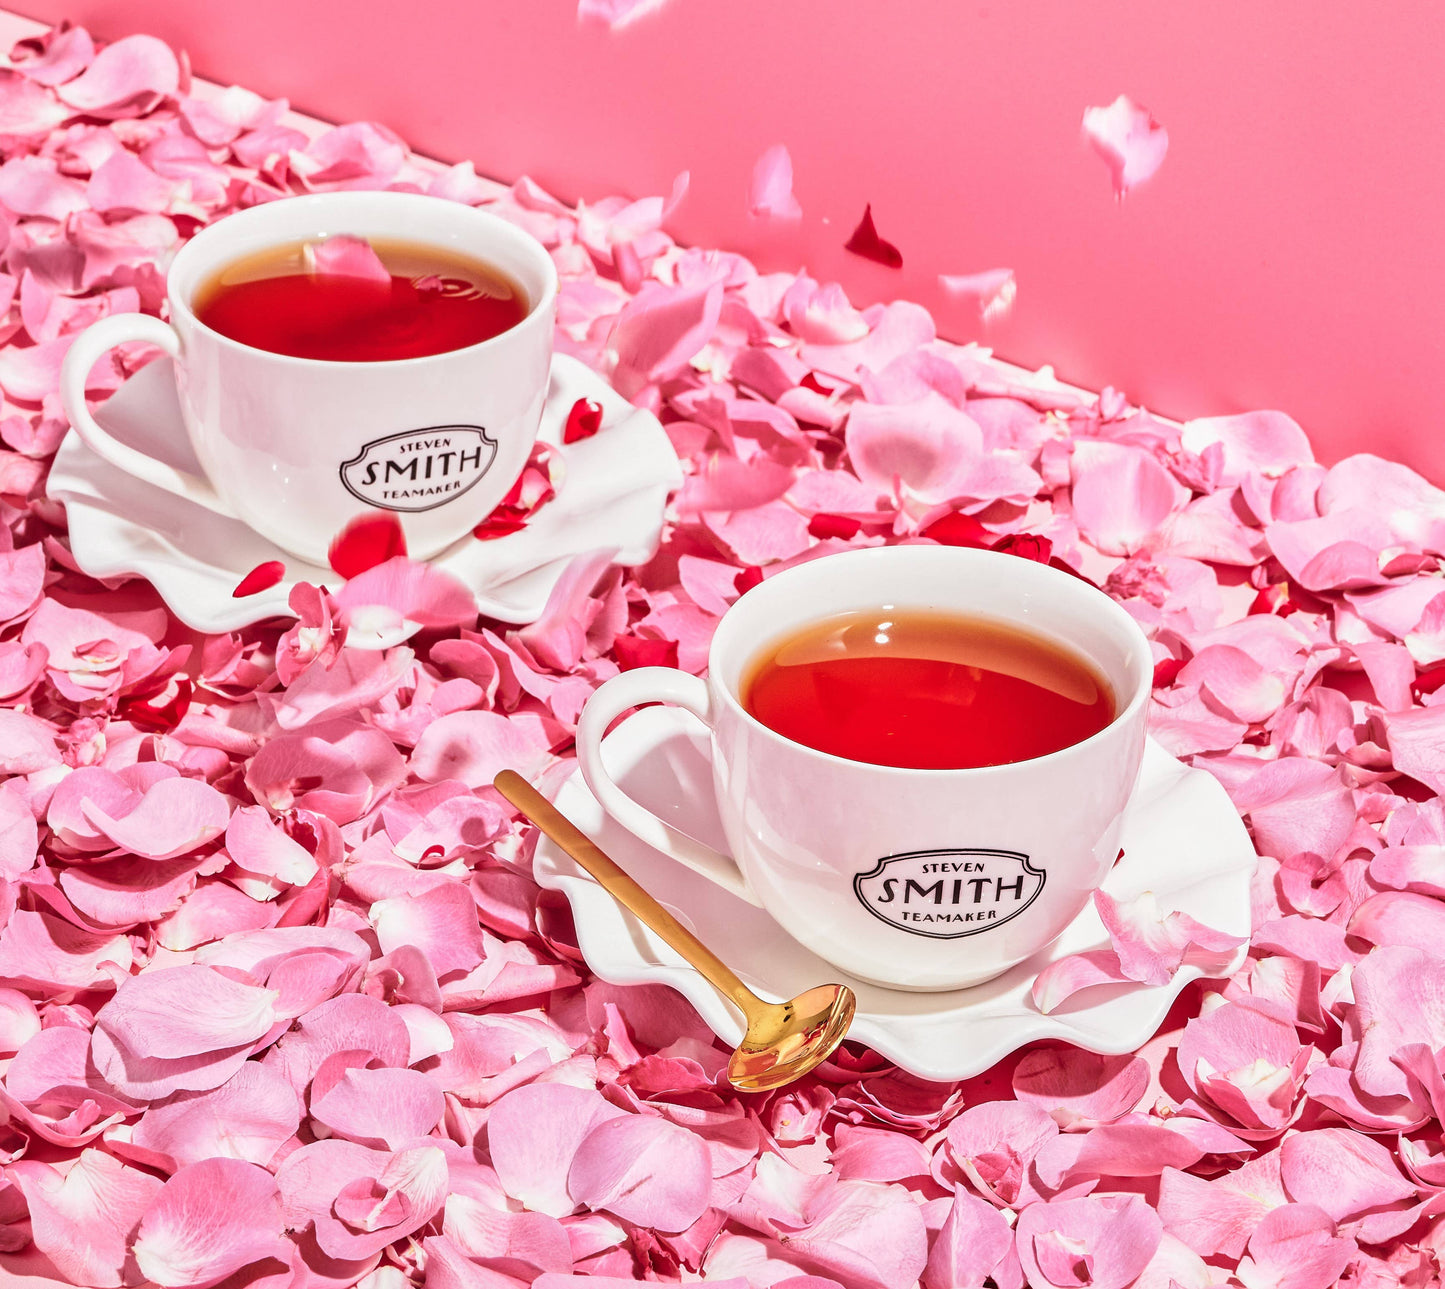 Lover's Leap - Valentine's Day Seasonal Tea - Retail Carton: Carton Case